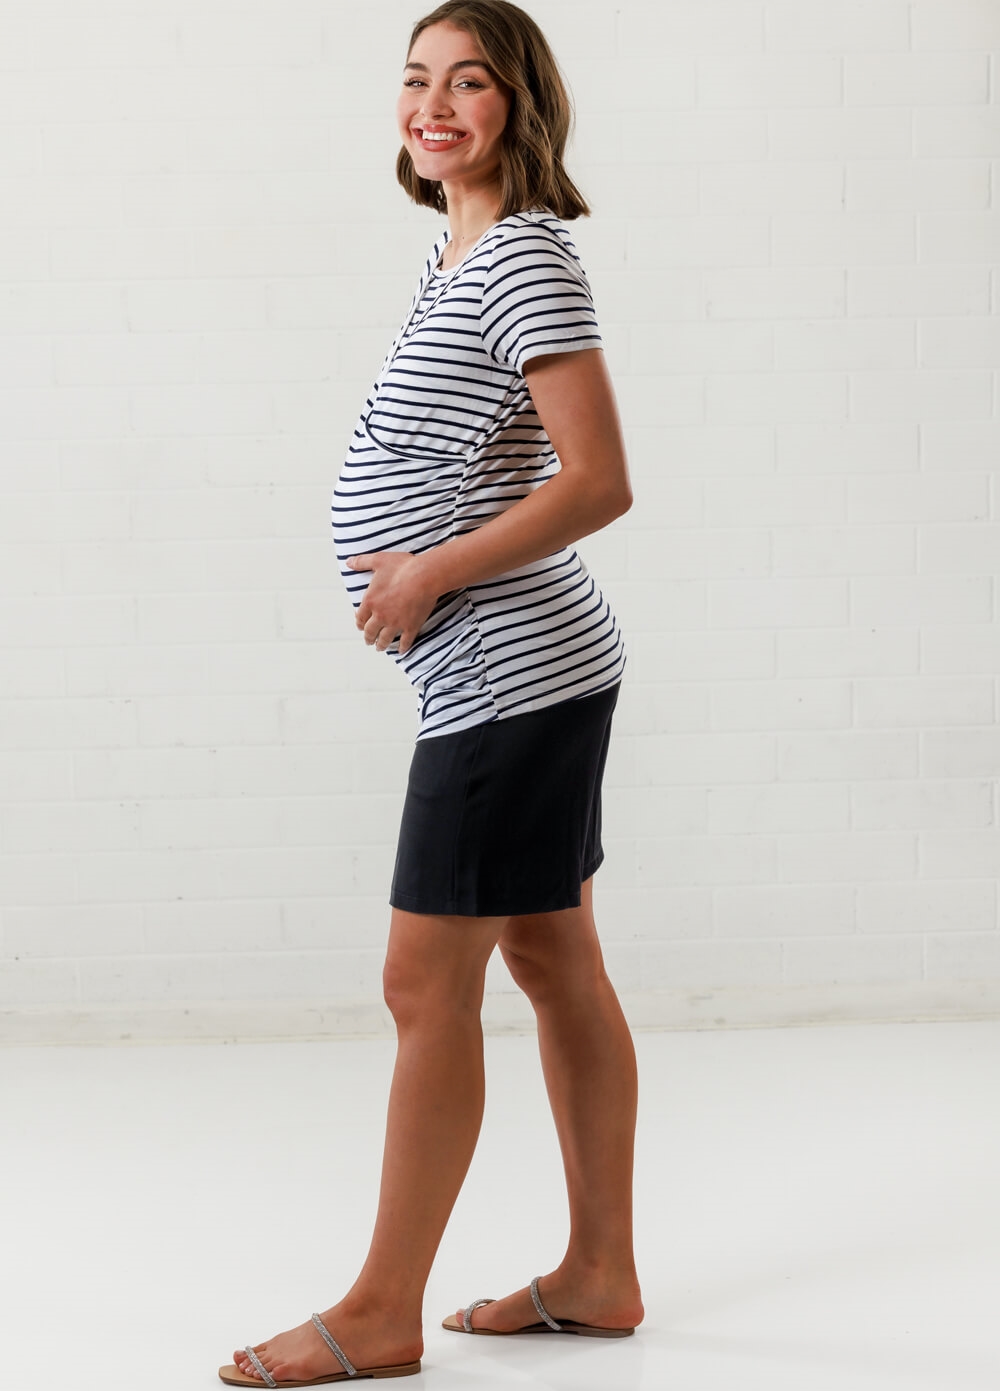 Lait & Co - Laetitia Maternity Nursing Top in White/Black Stripes